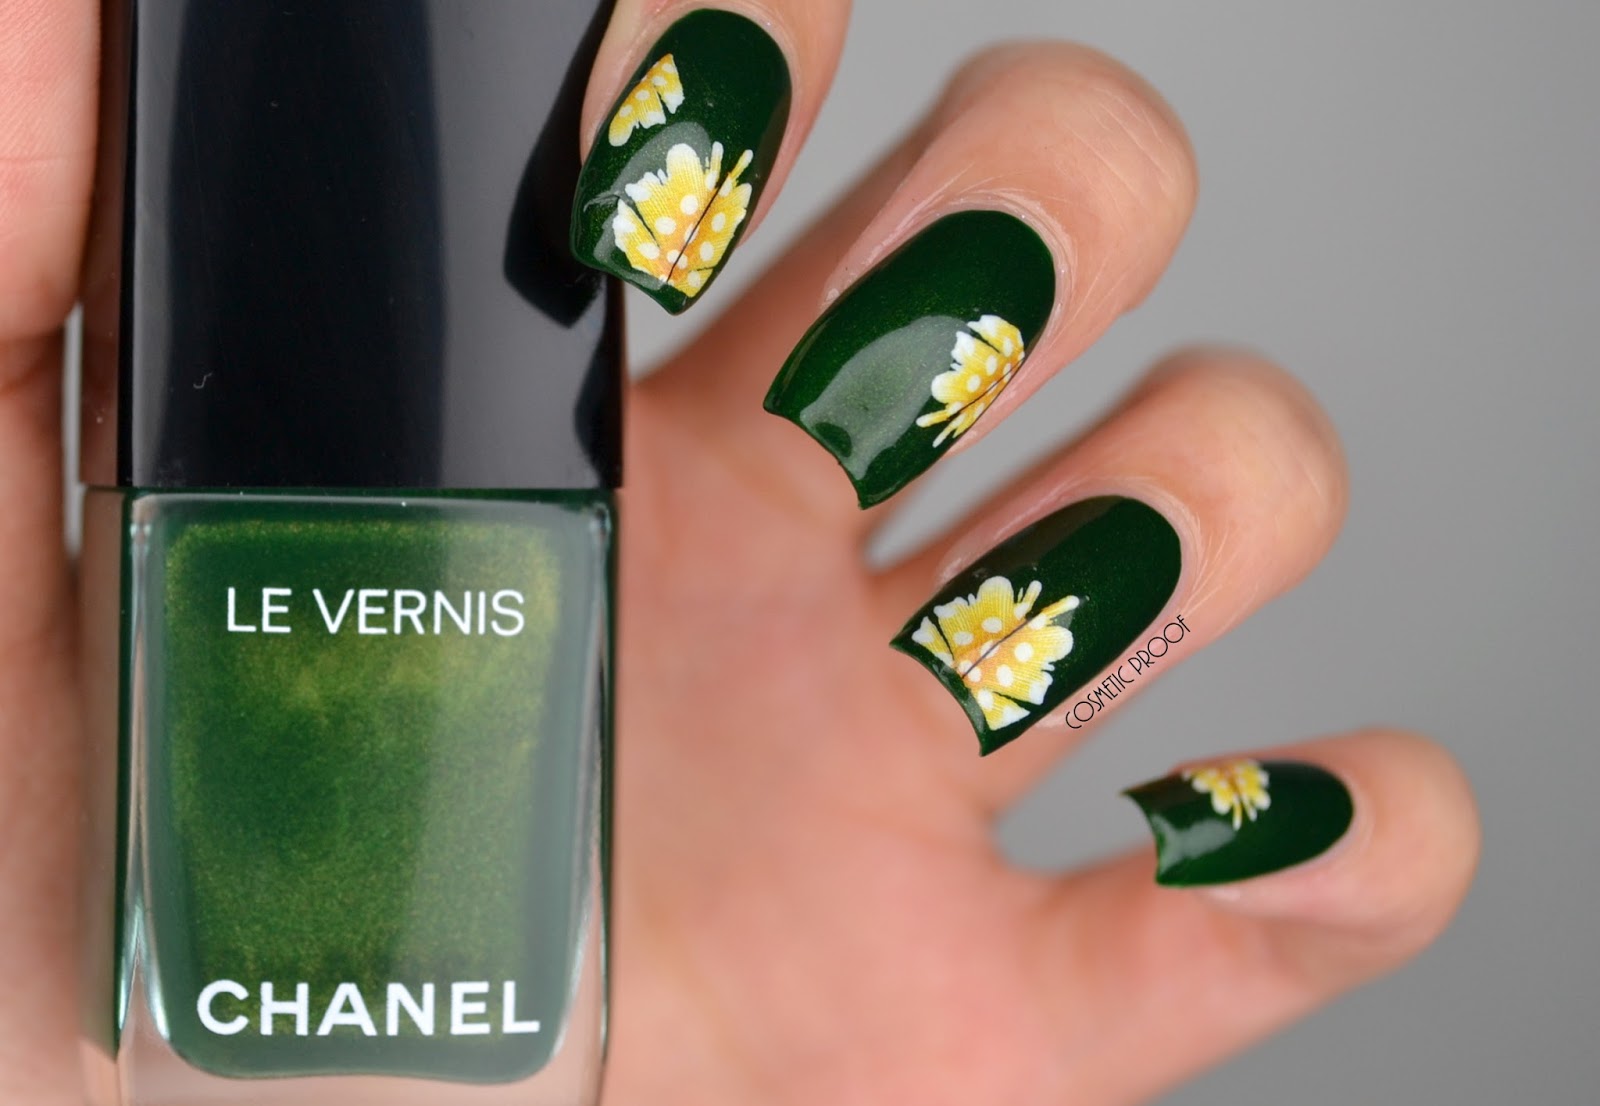 NAILS, Chanel #536 Emeraude with Bonus Nail Art